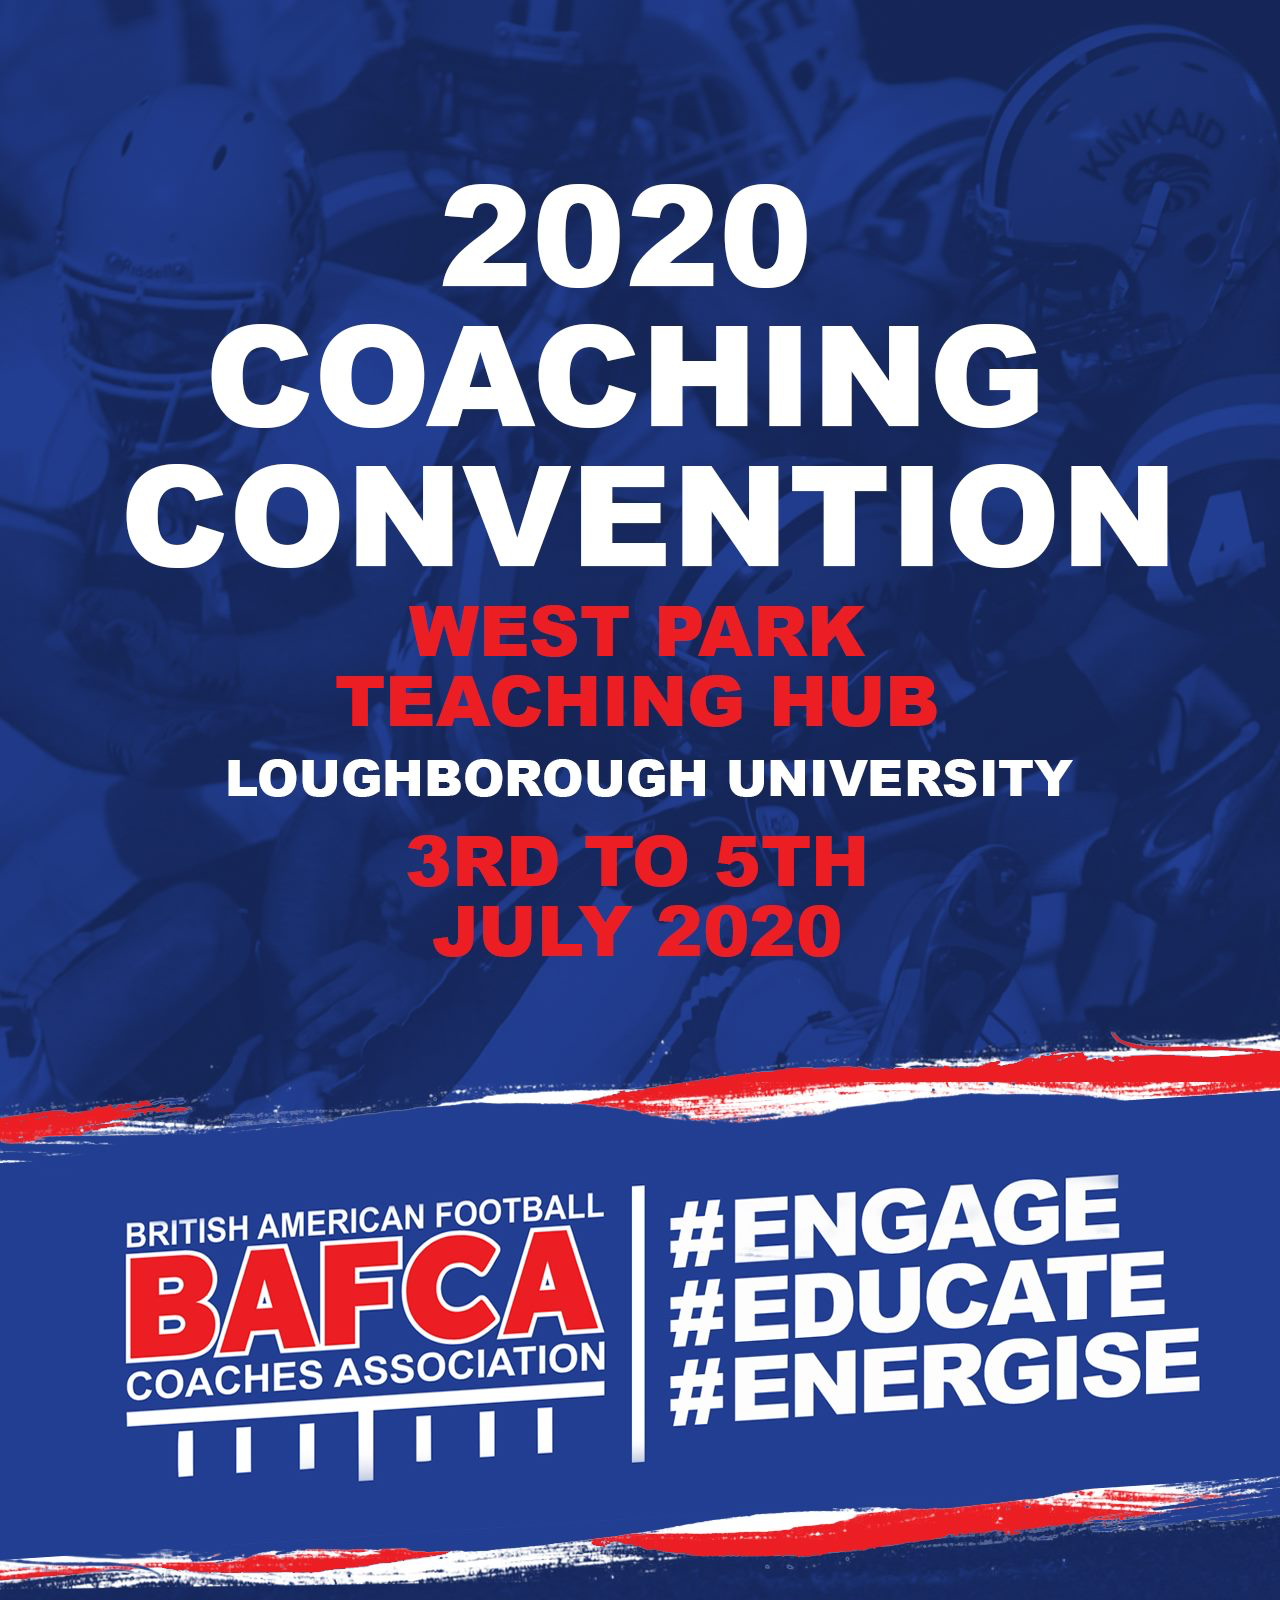 BAFCA 2020 Coaching Convention Announced British American Football